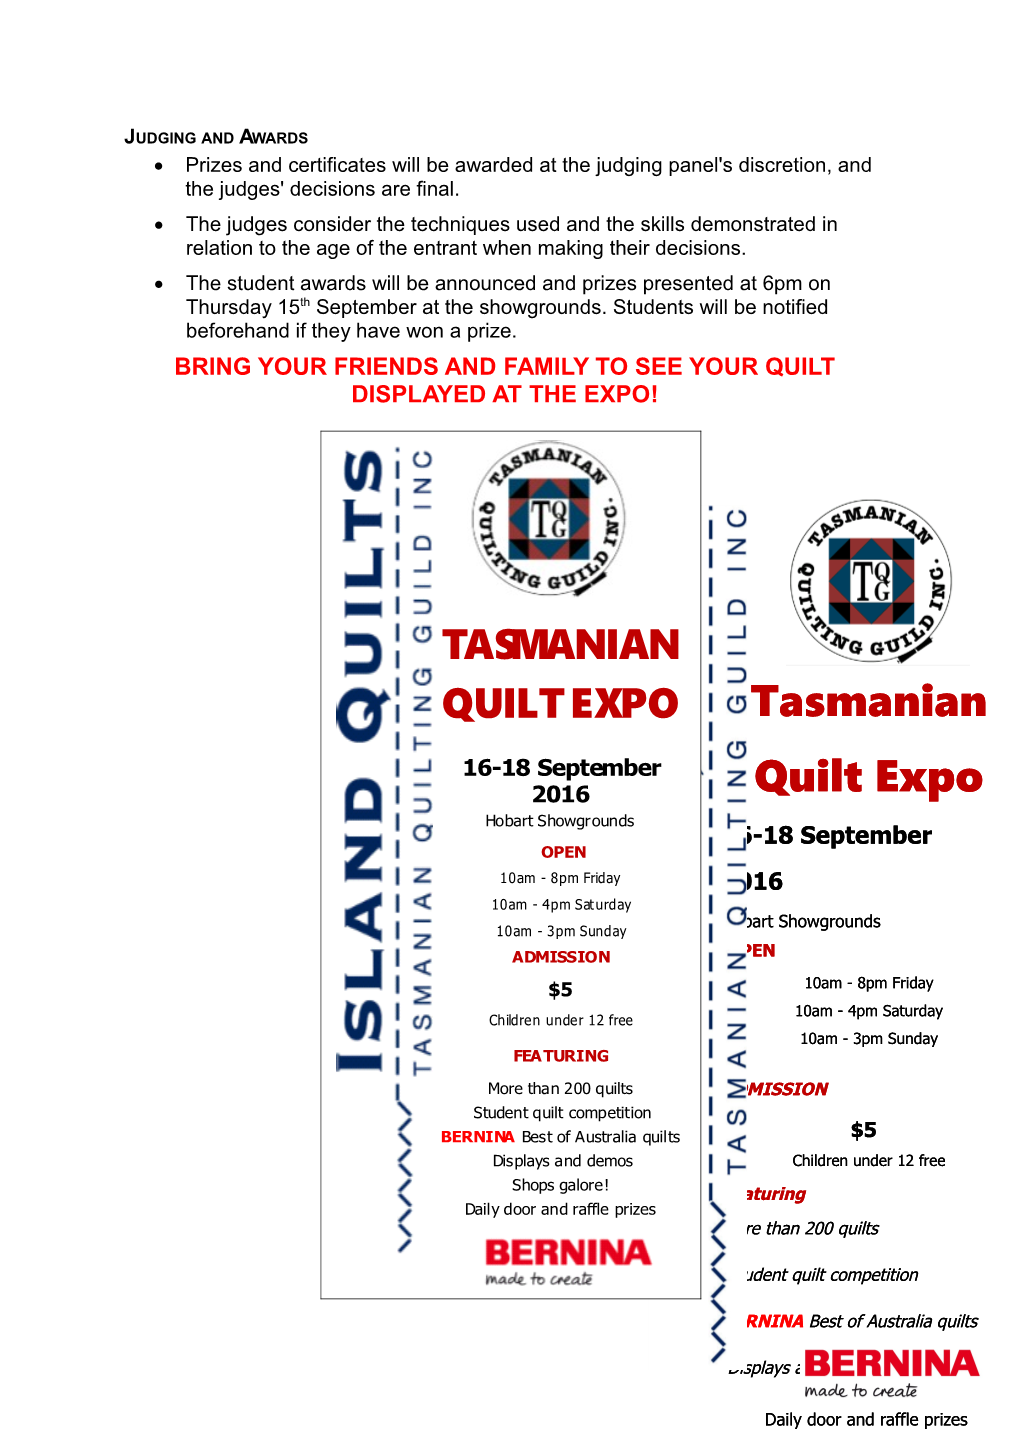 Tasmanian Quilt Expo